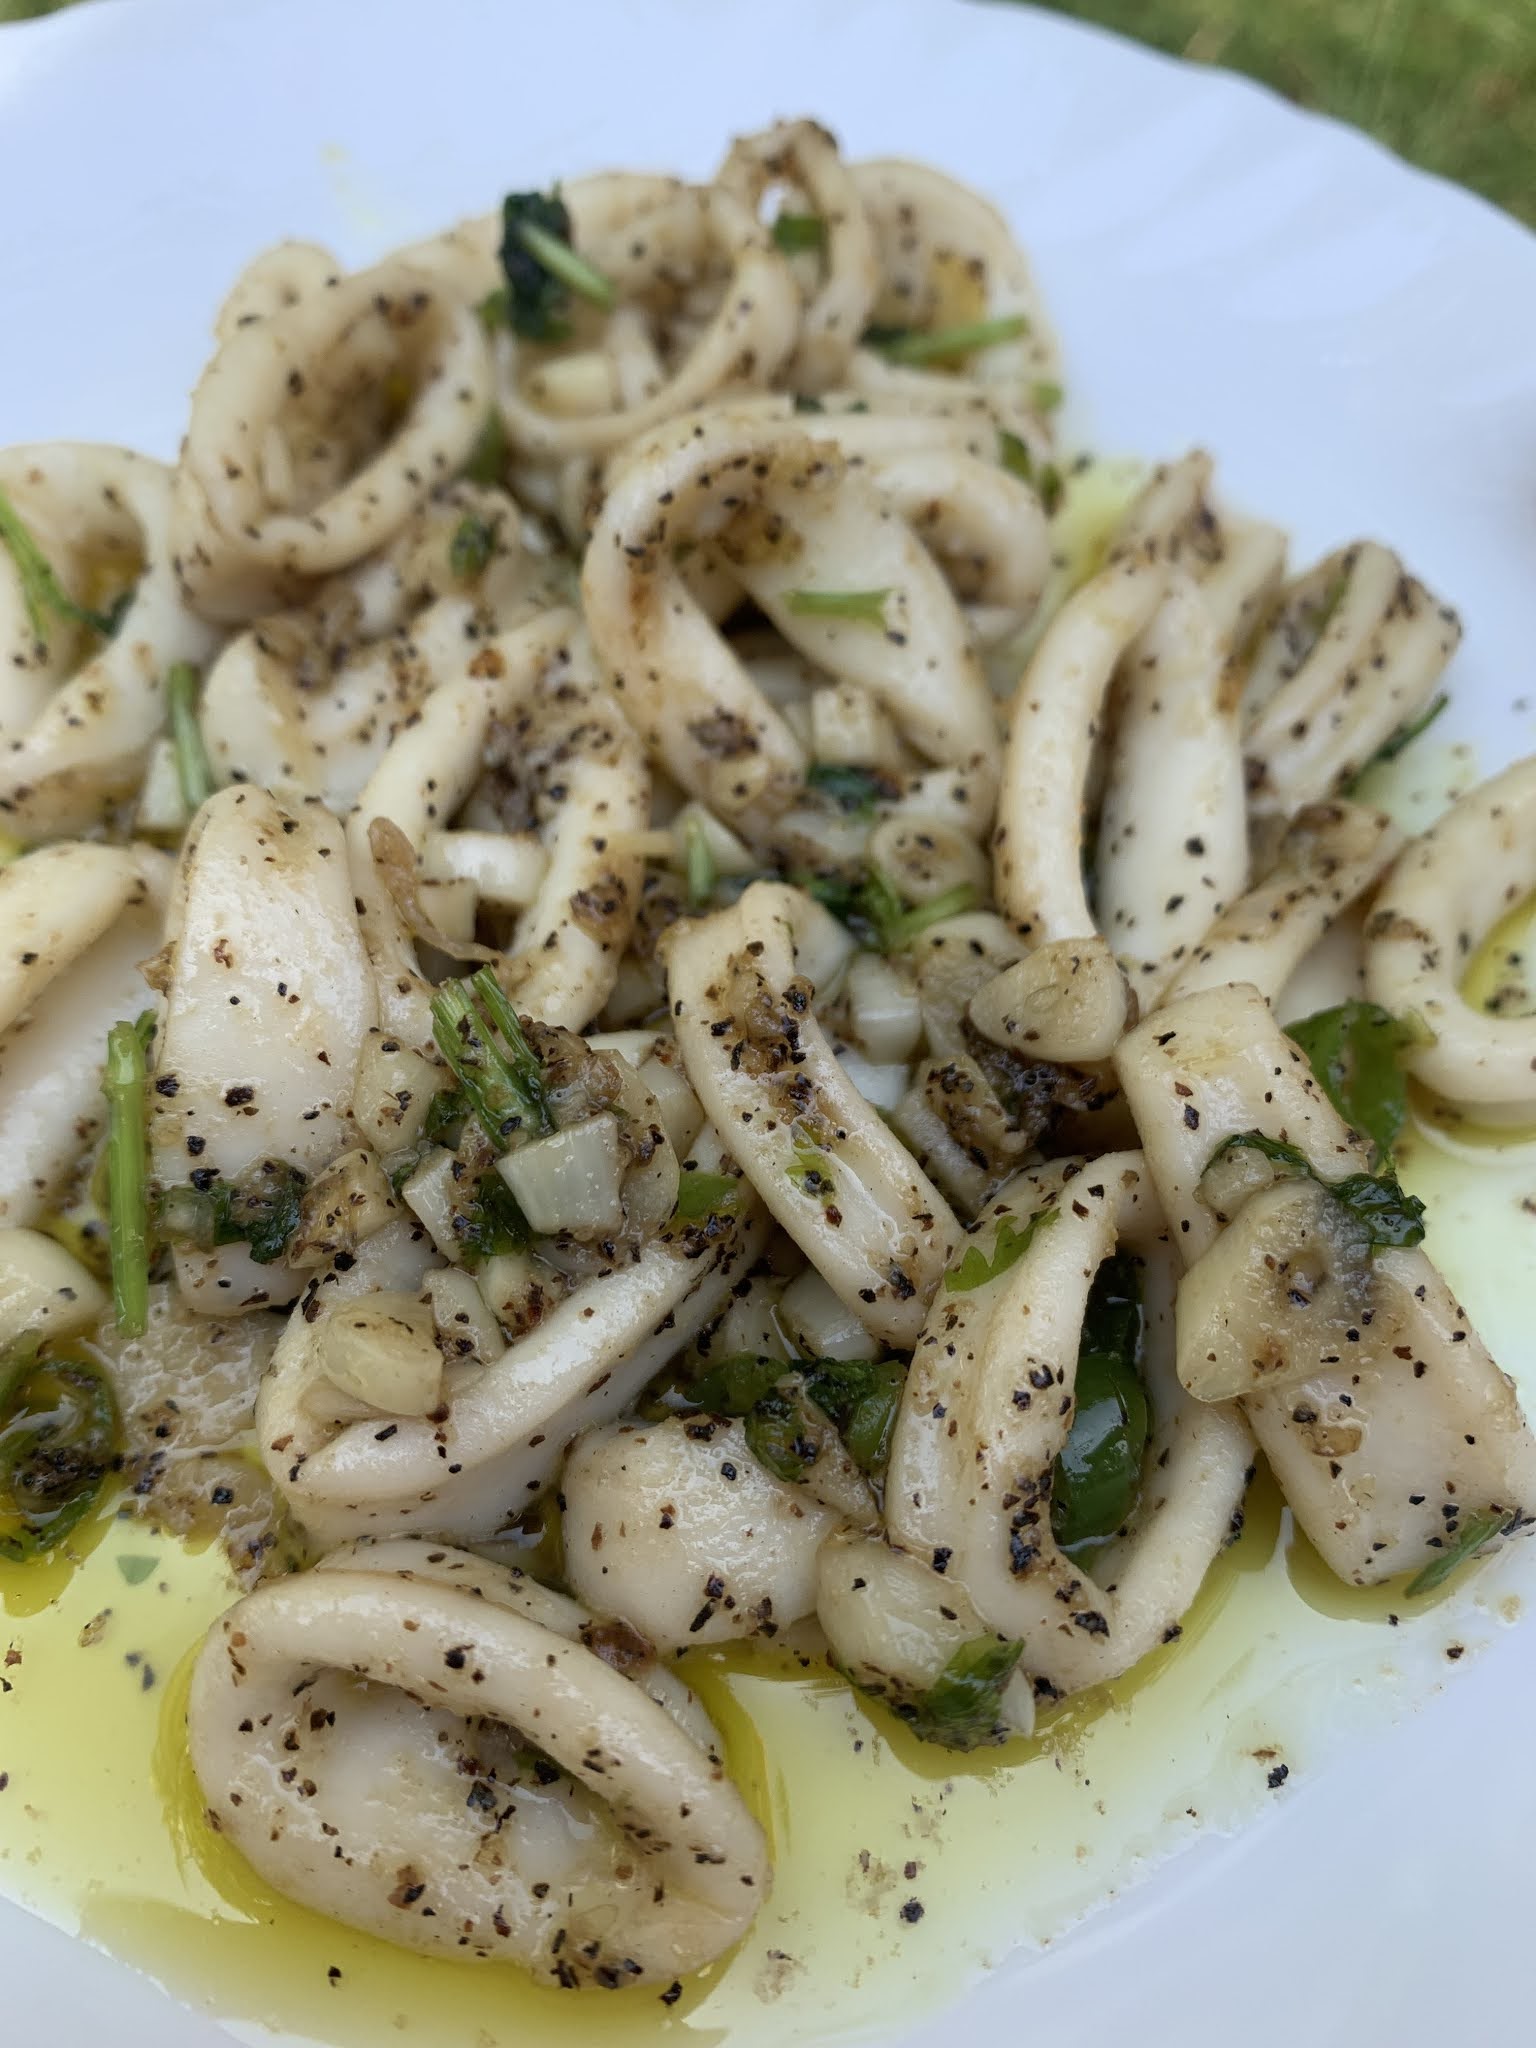 Greek Style garlic calamari recipe easy to make rich in flavor